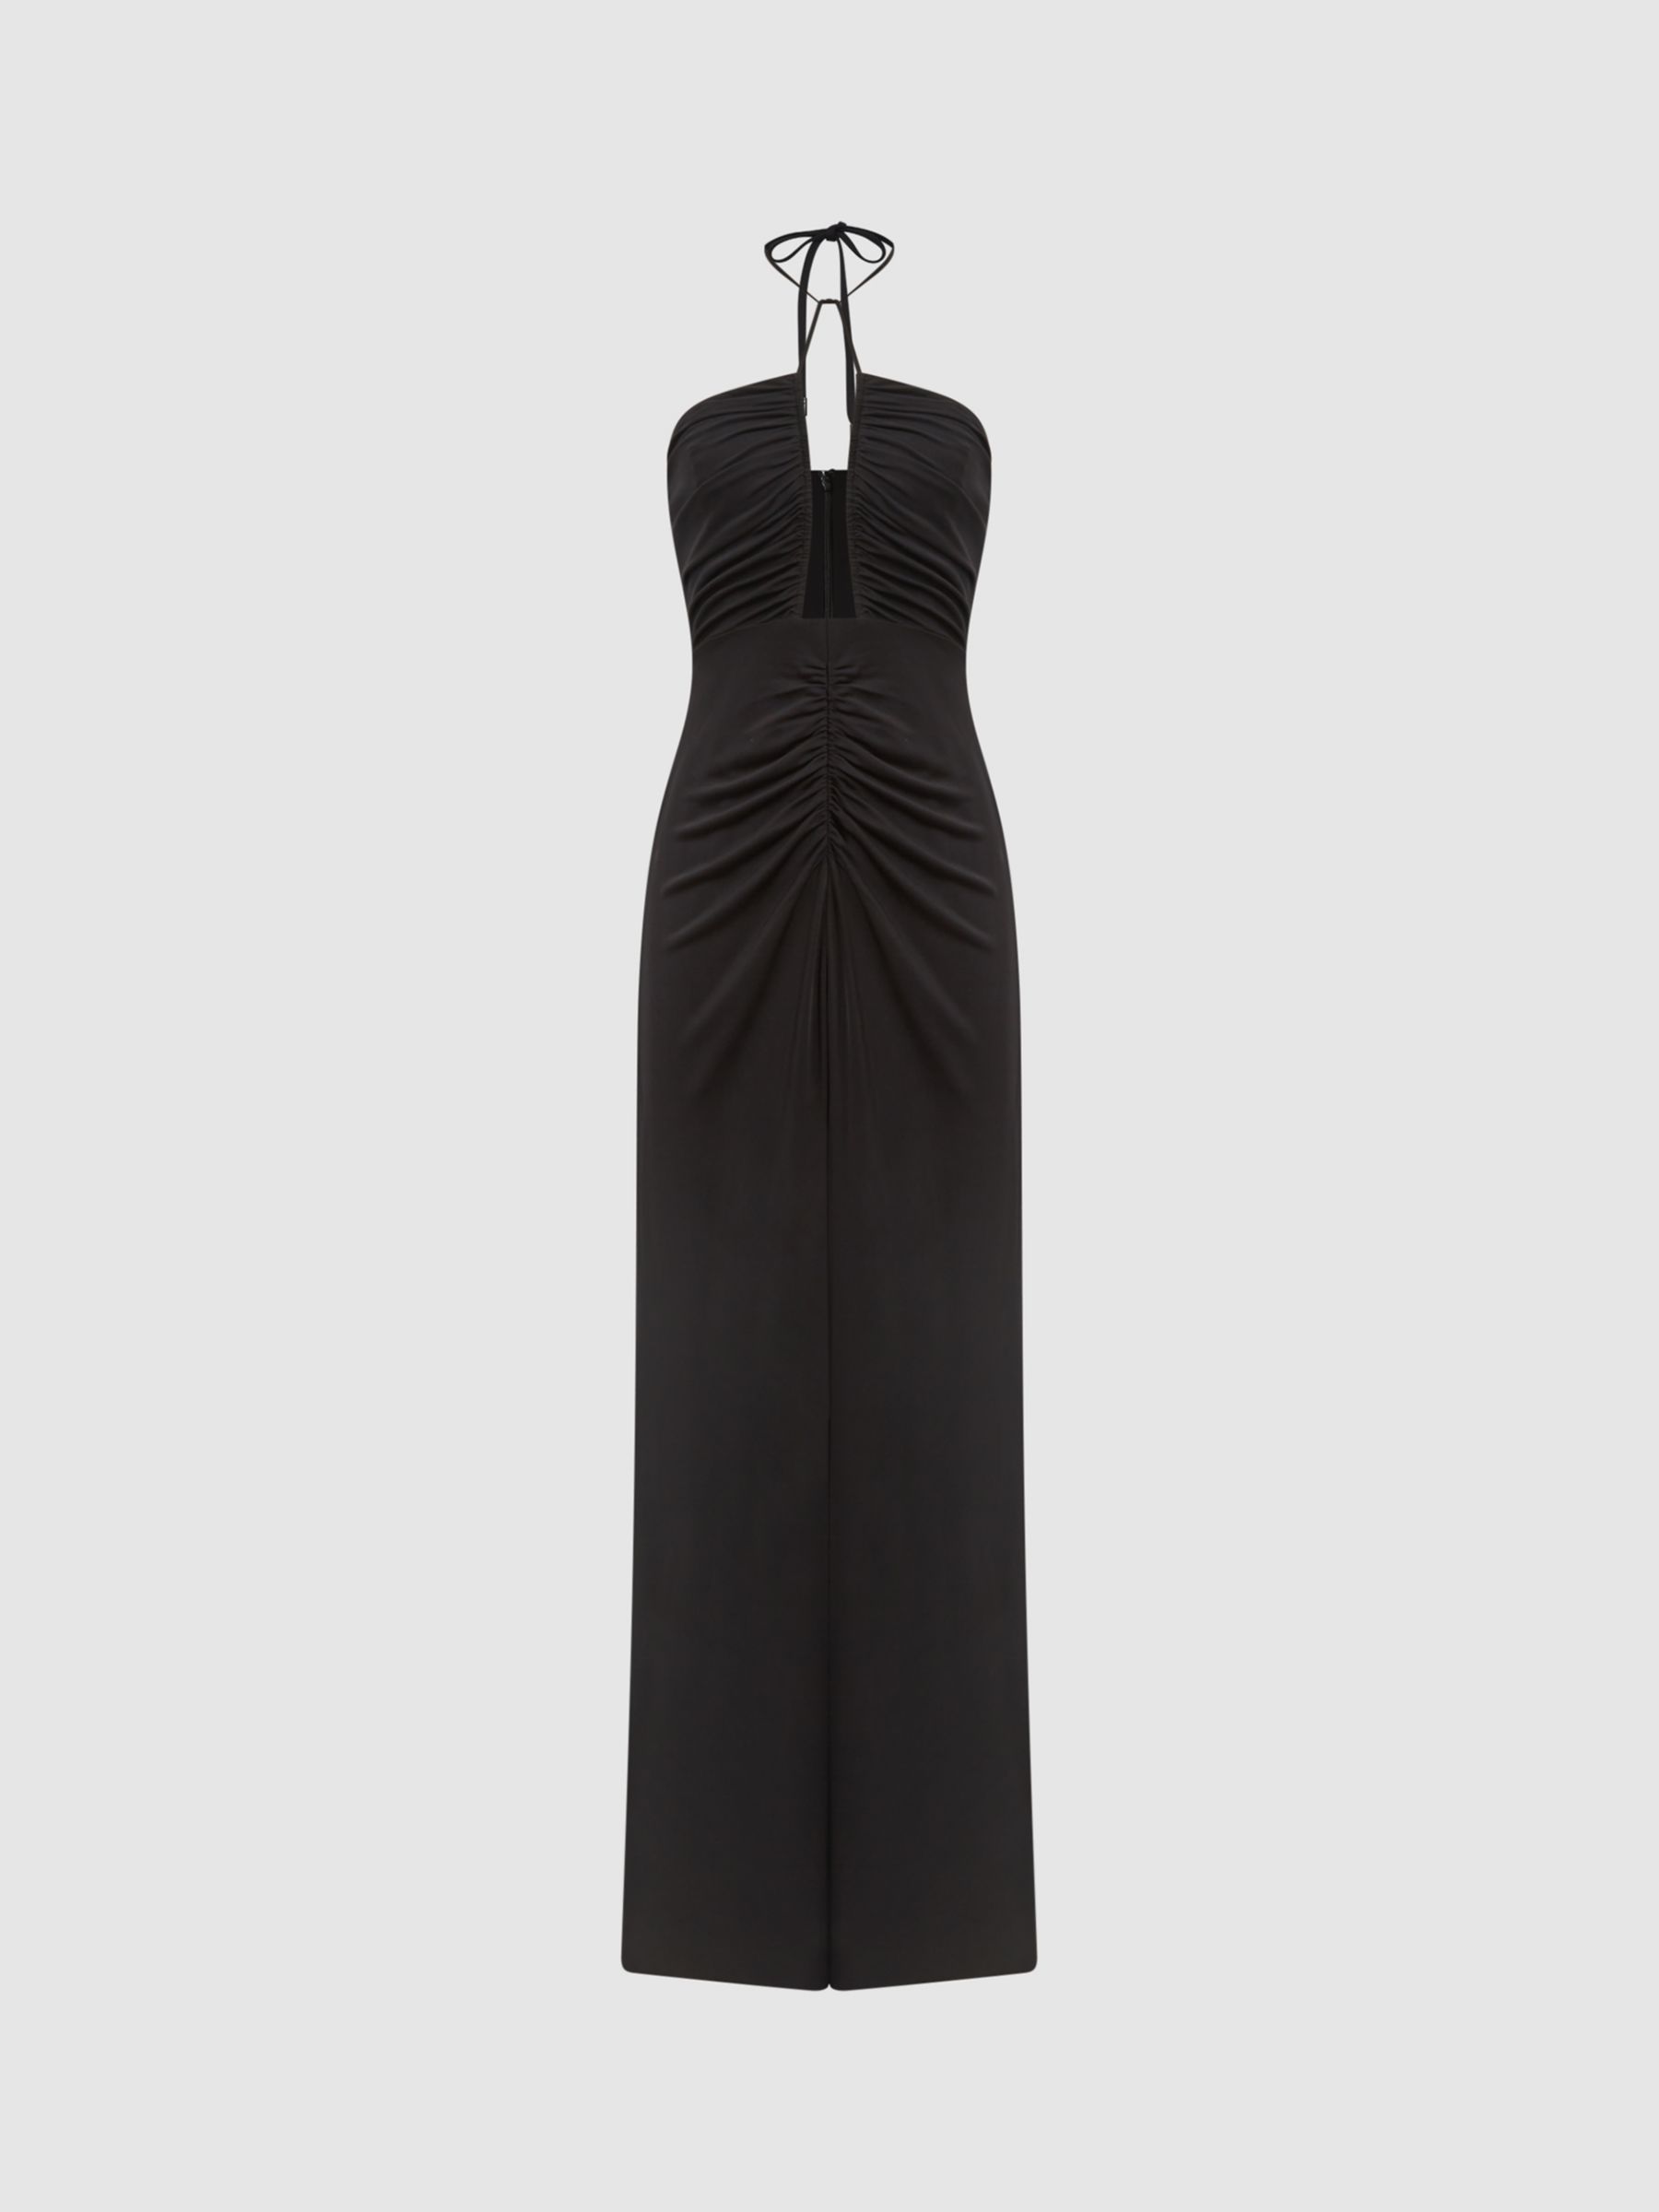 Reiss Lana Plunge Strappy Bodice Dress, Black at John Lewis & Partners